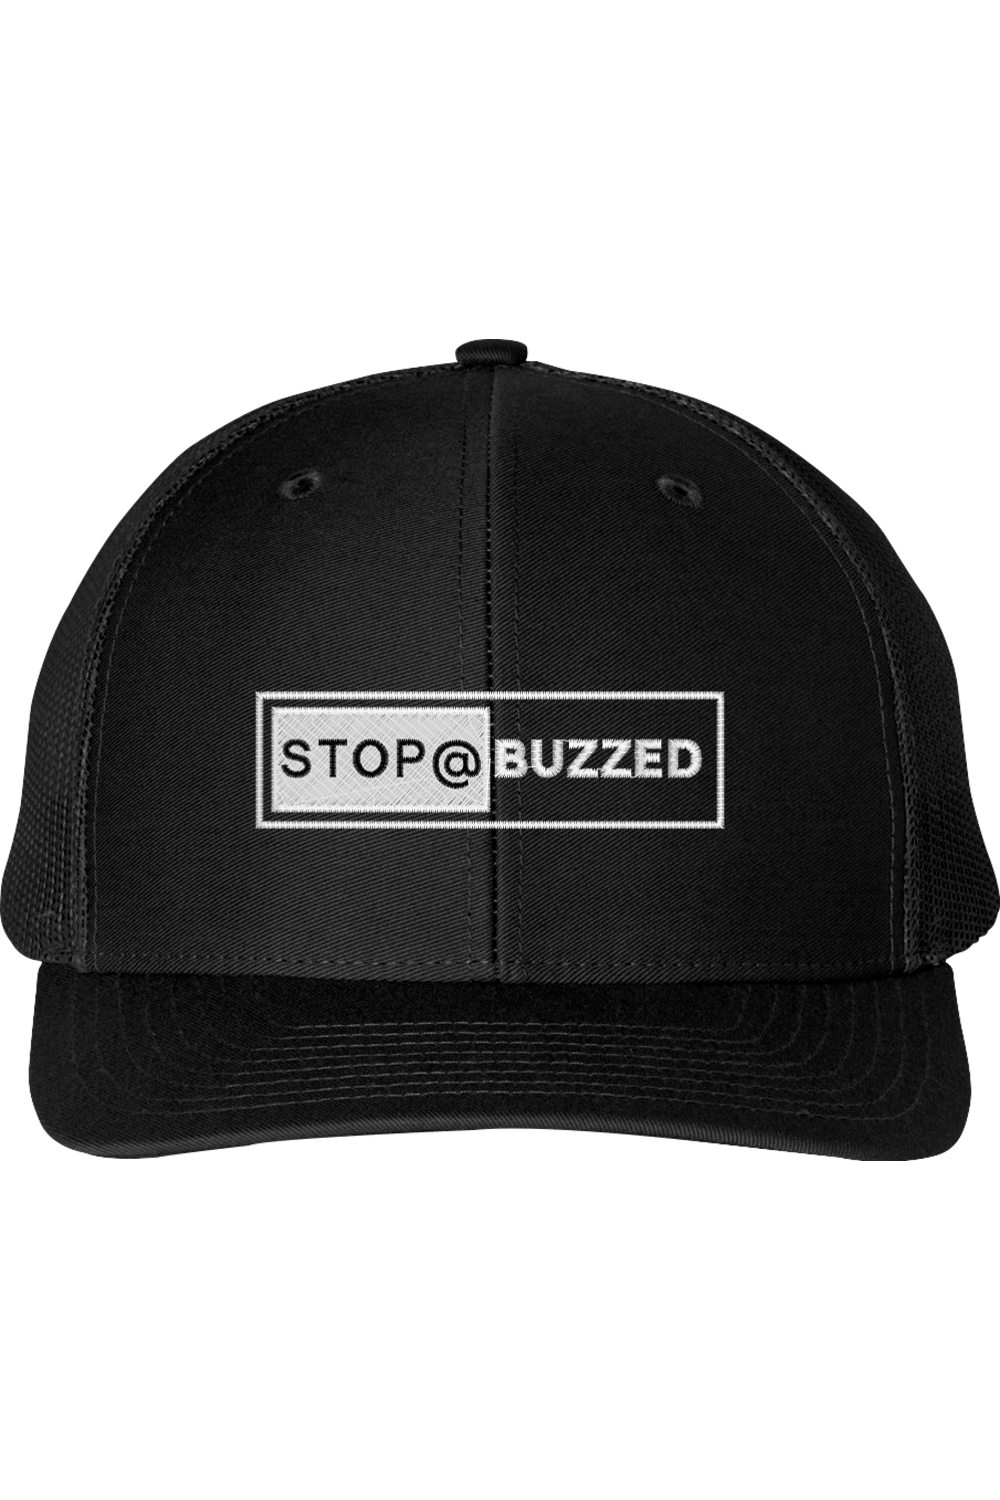 Stop @ Buzzed Richardson Snapback Trucker Cap